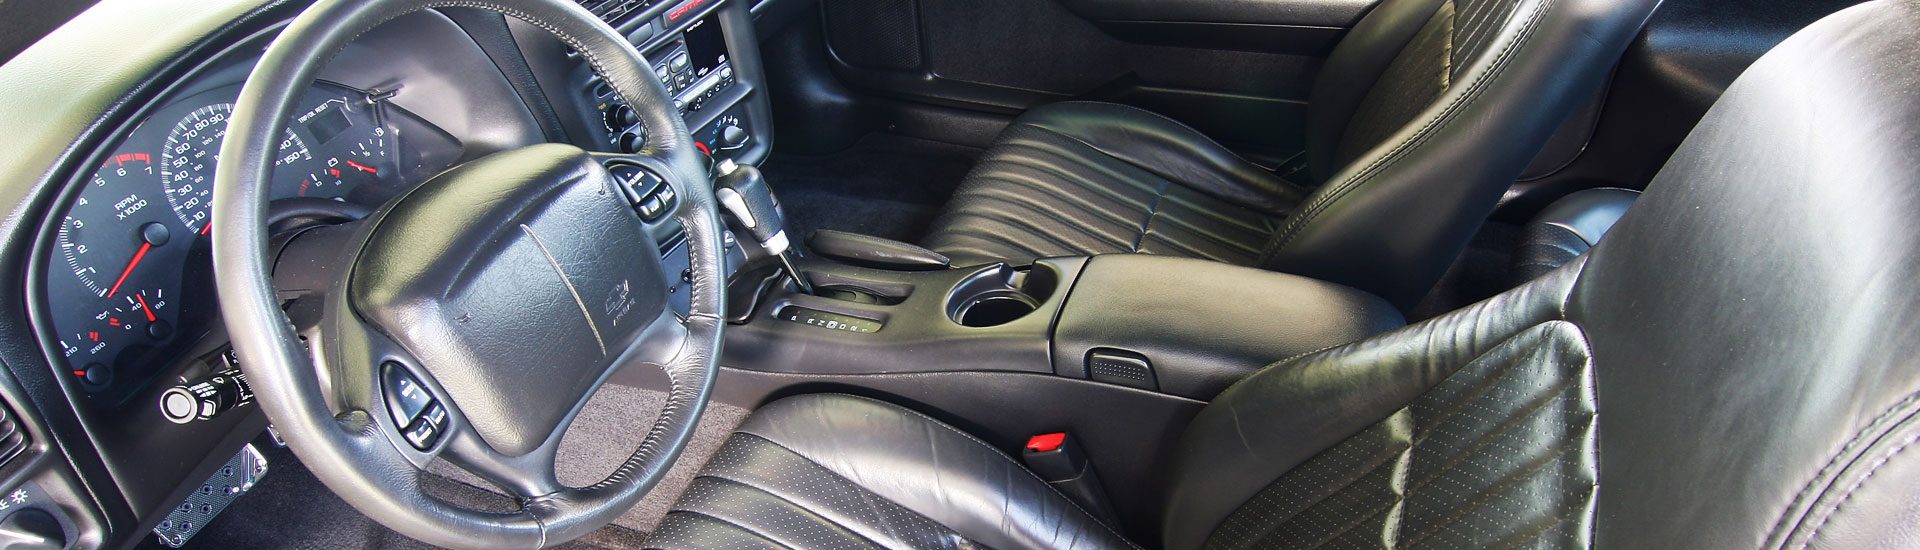 2000 Chevrolet Camaro Dash Kits